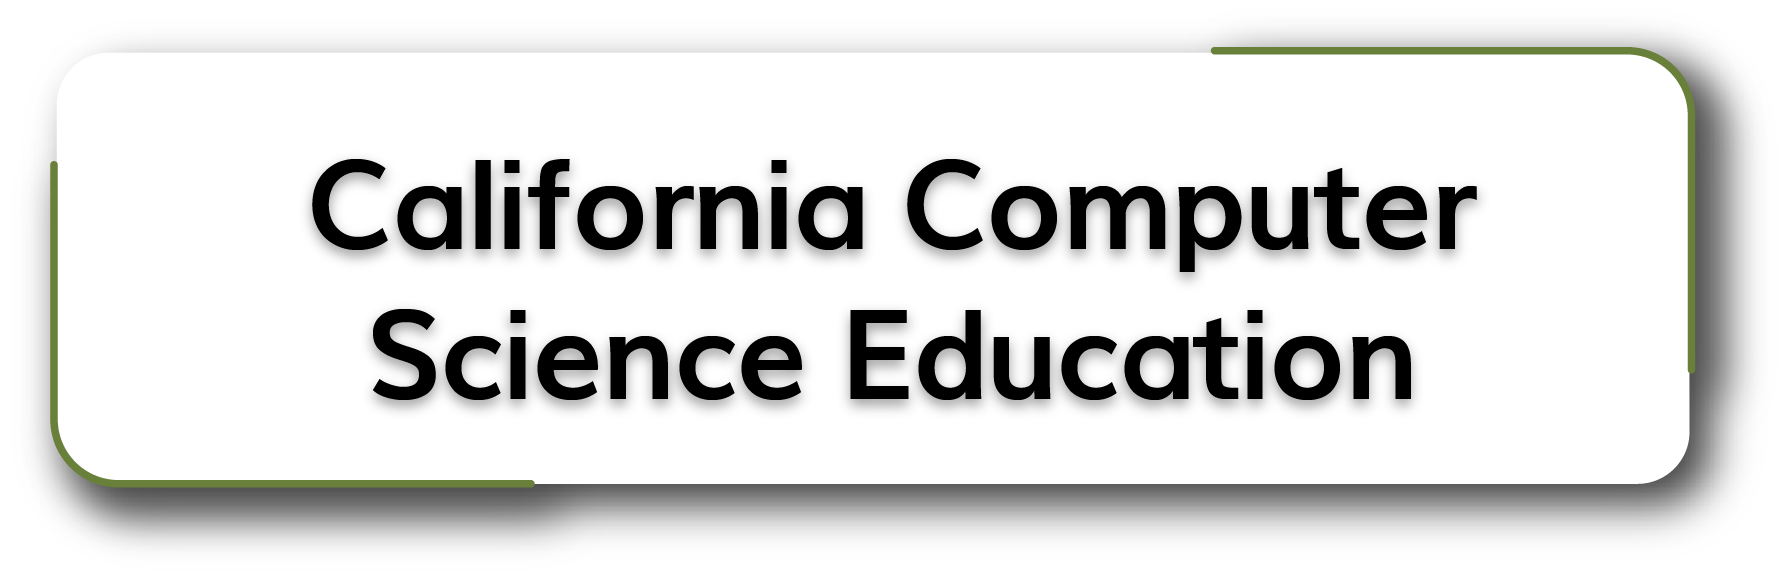 California Computer Science Education Button